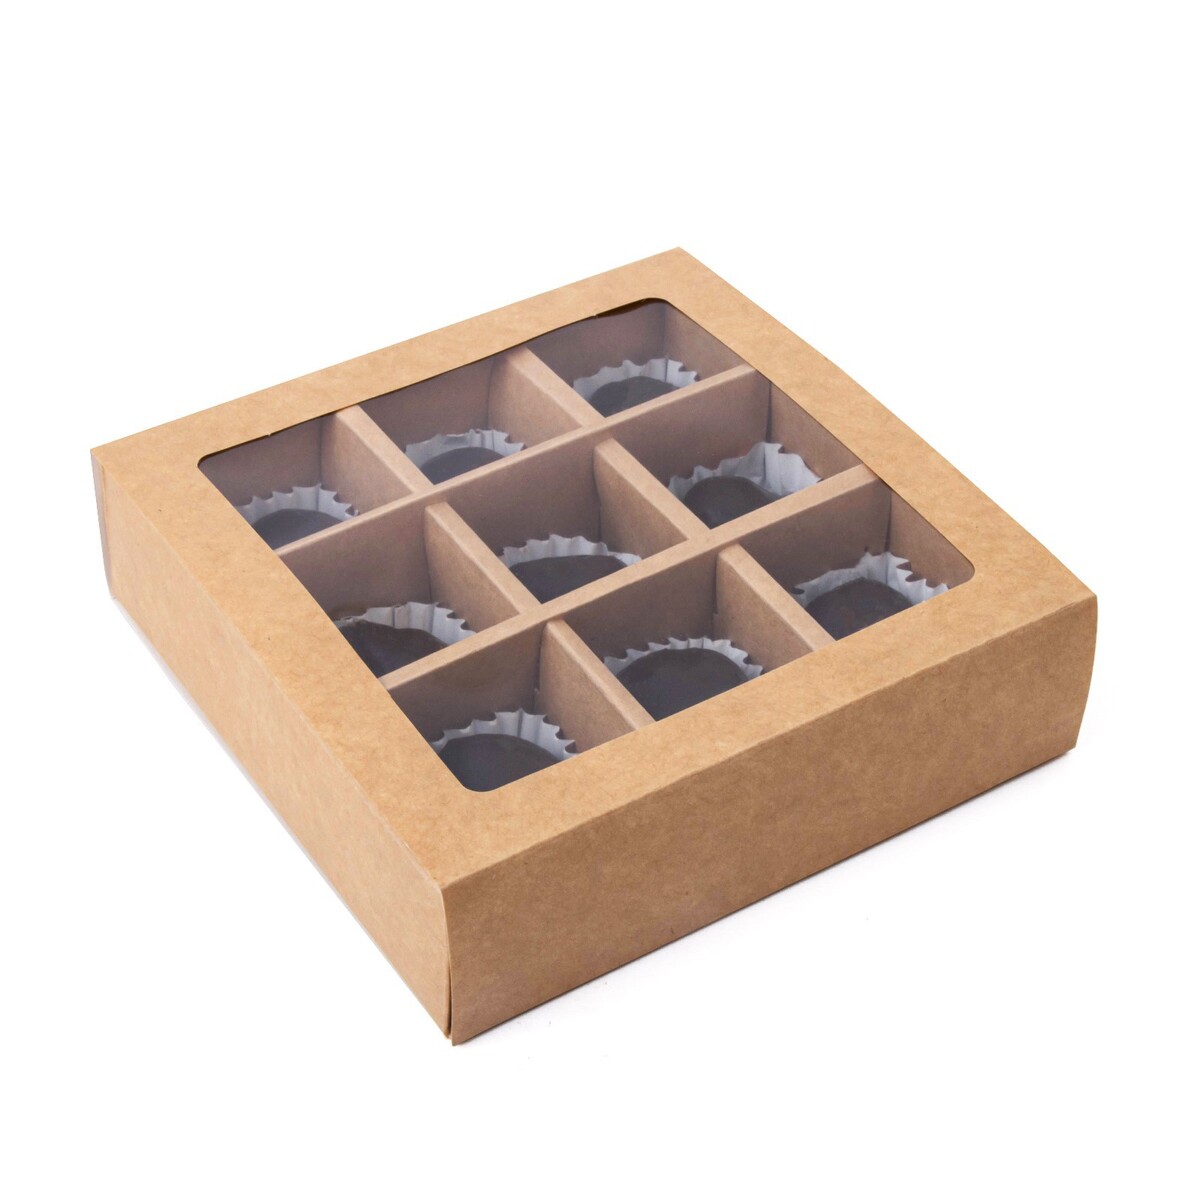 Коробка складная под 9 конфет, крафт, 13,8 х 13,8 х 3,8 см коробка для конфет 6 штук 8 7 х 5 8 х 2 5 тонкие разделители крафт